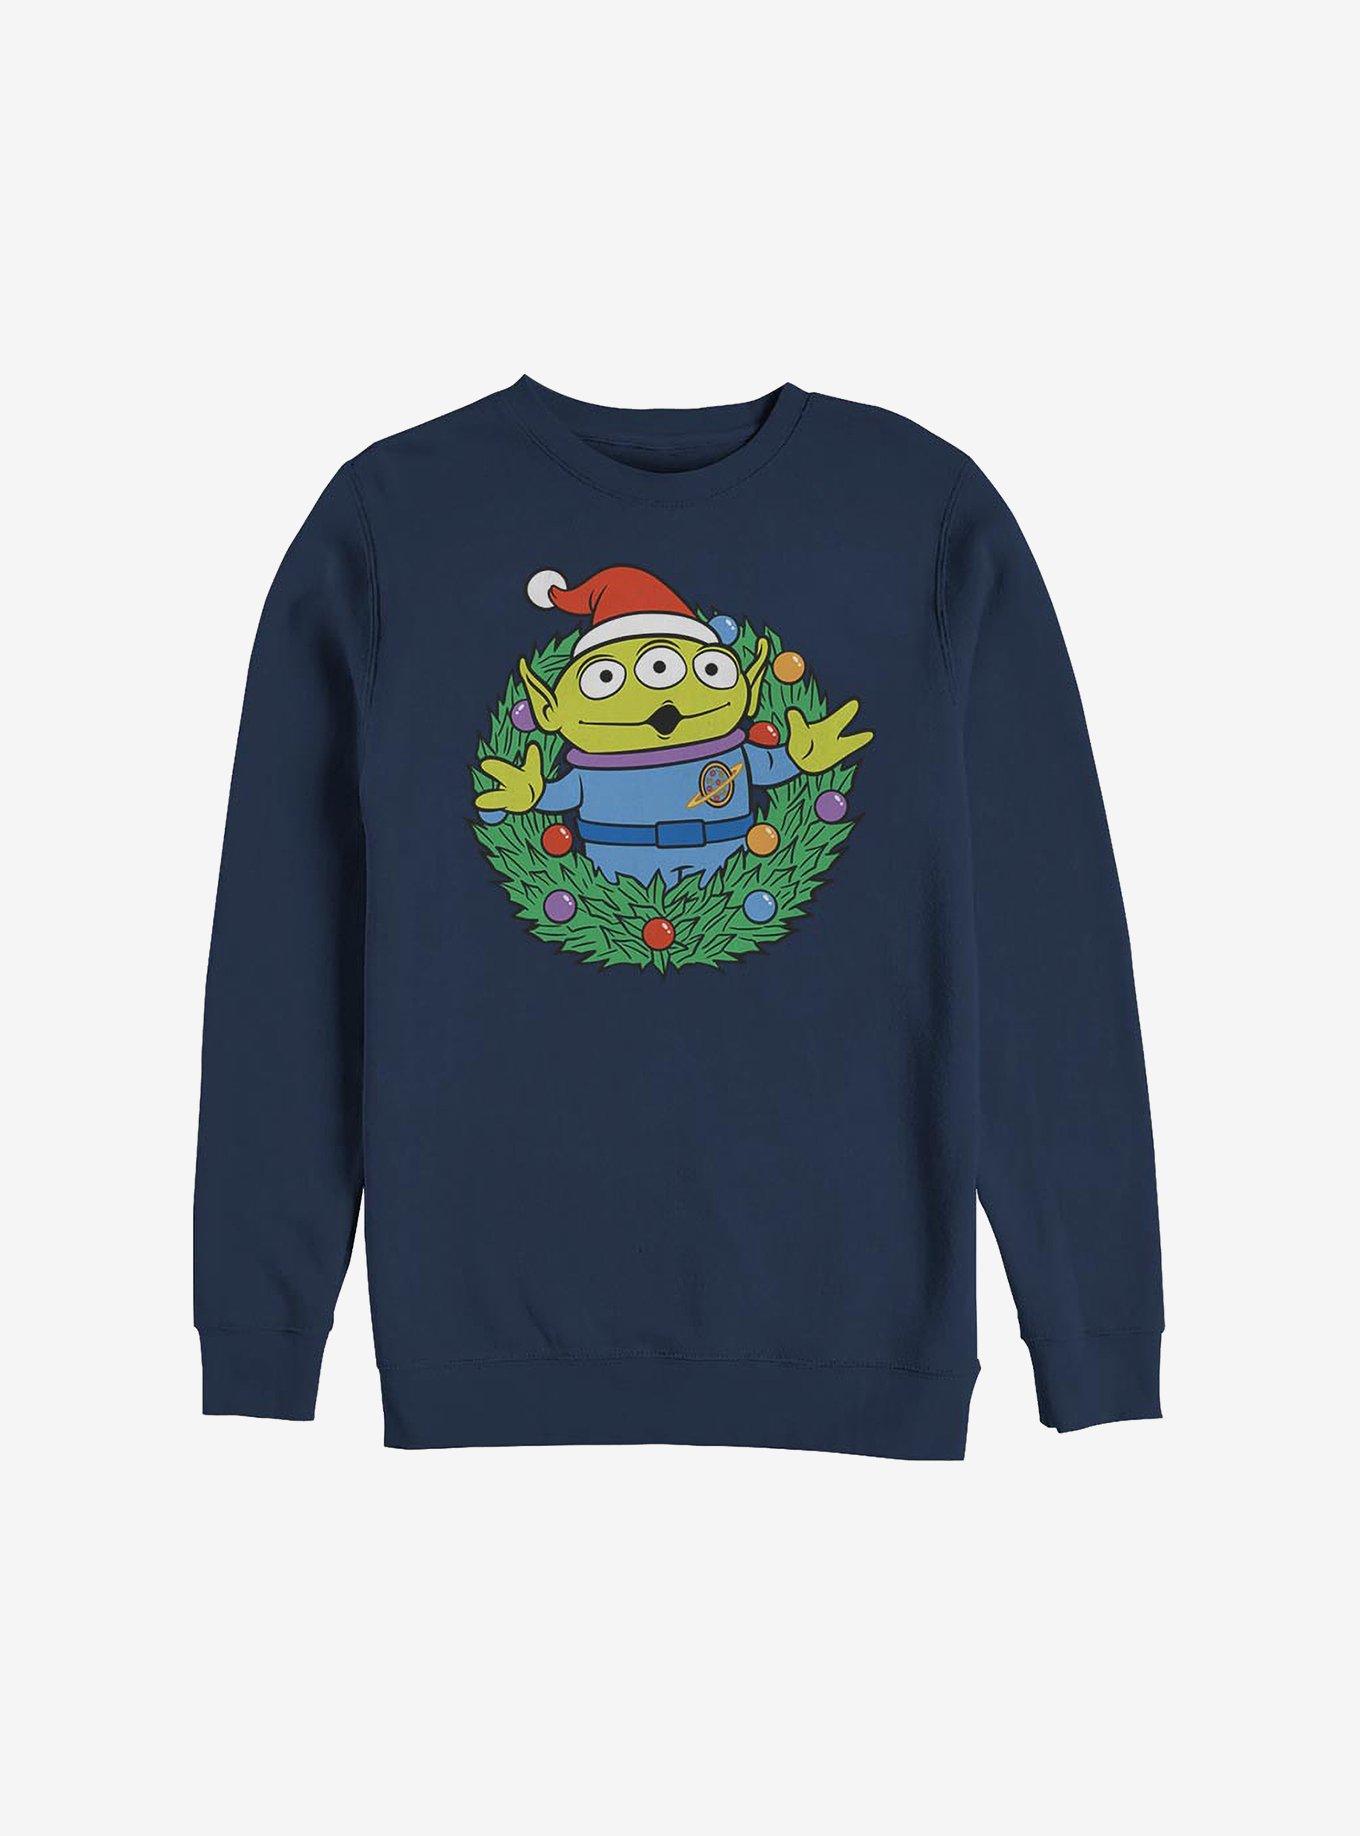 Disney Pixar Toy Story Alien Wreath Holiday Sweatshirt